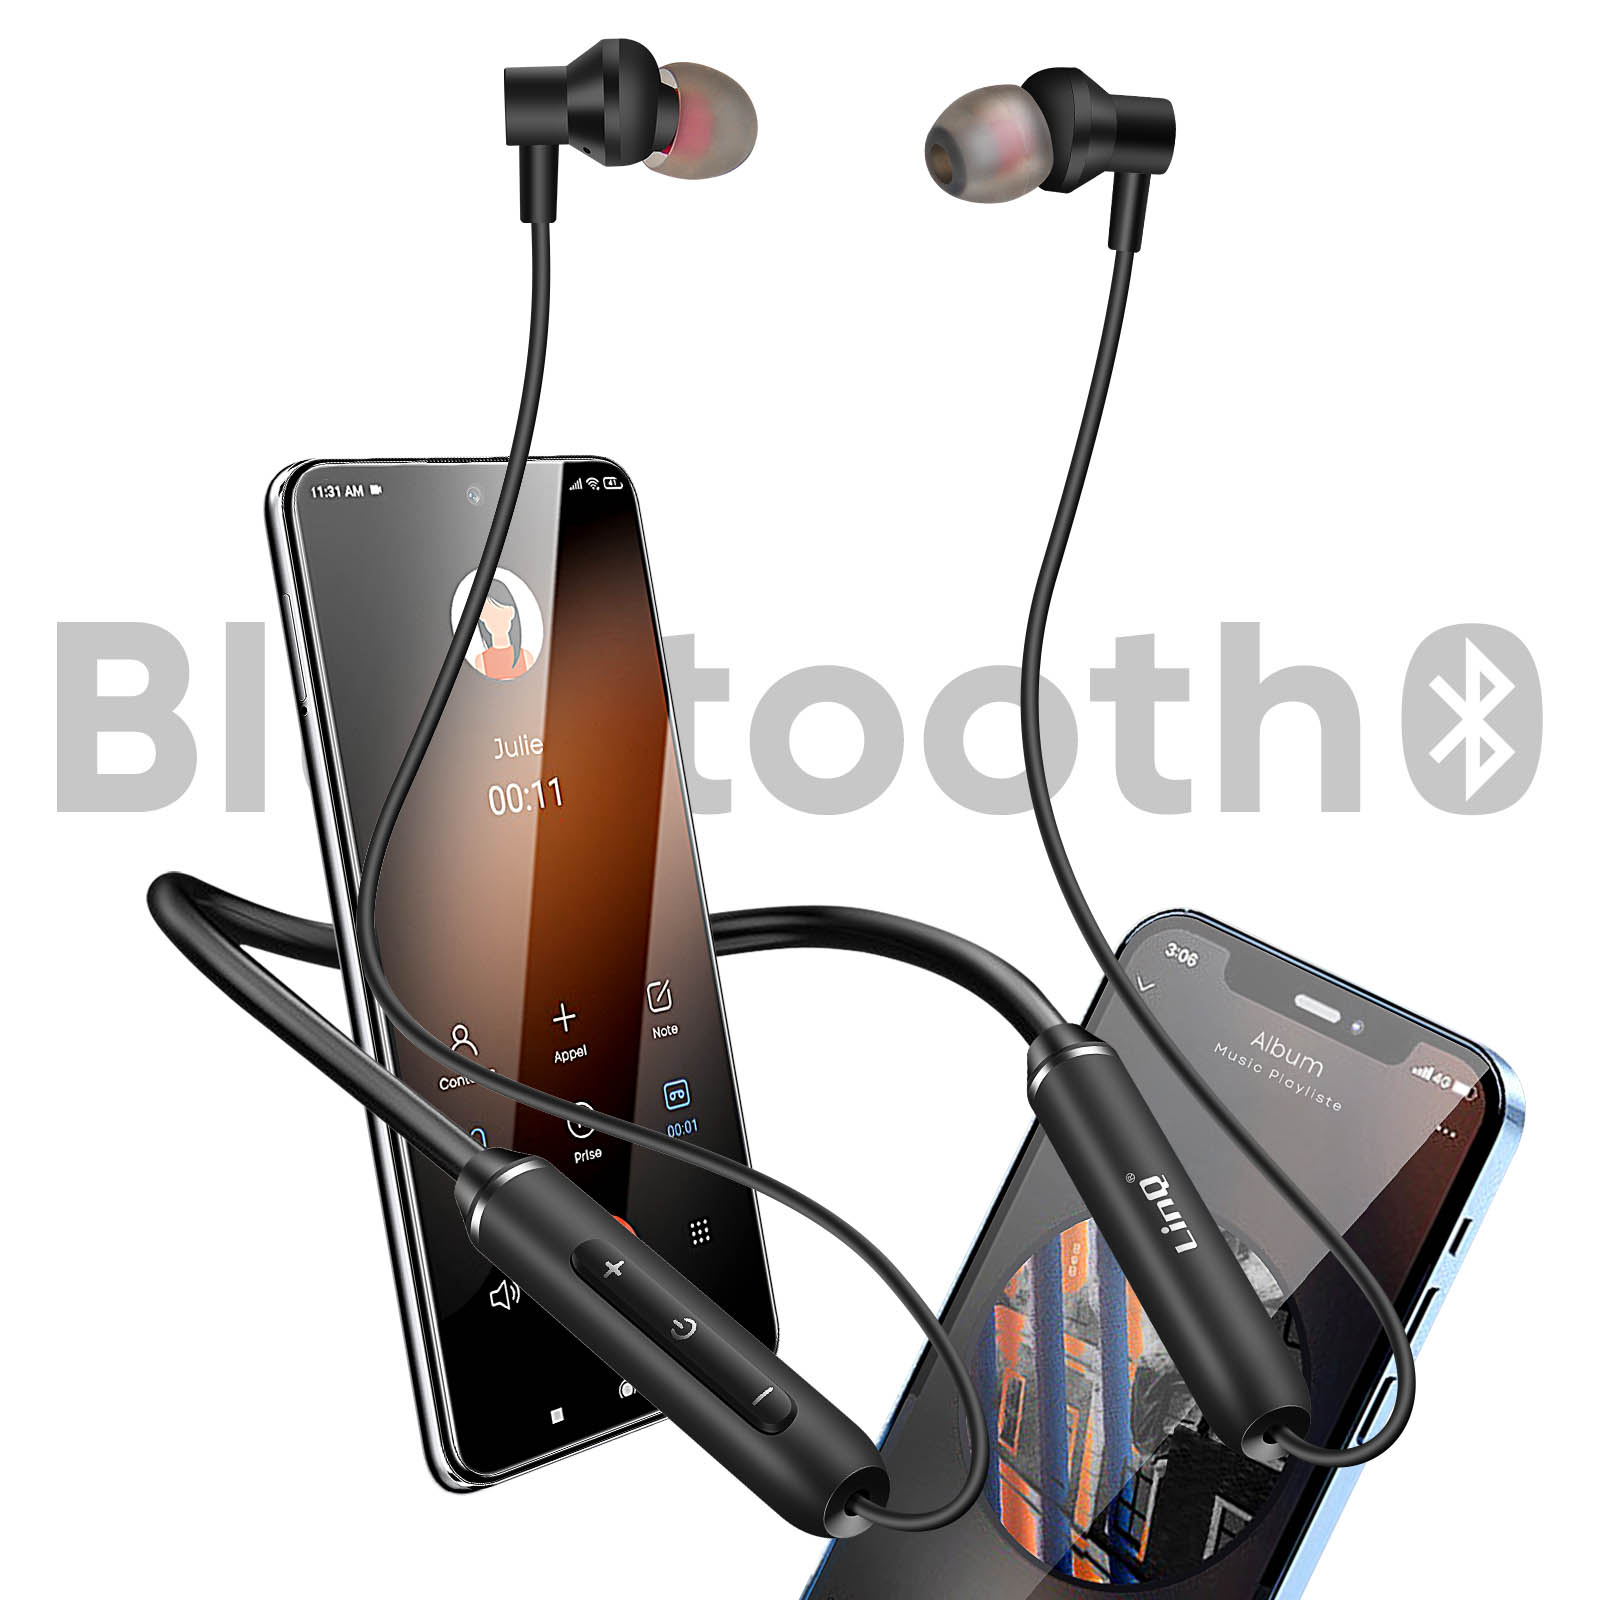 Modell Bluetooth Kopfhörer S700 Nackenbügel, LINQ